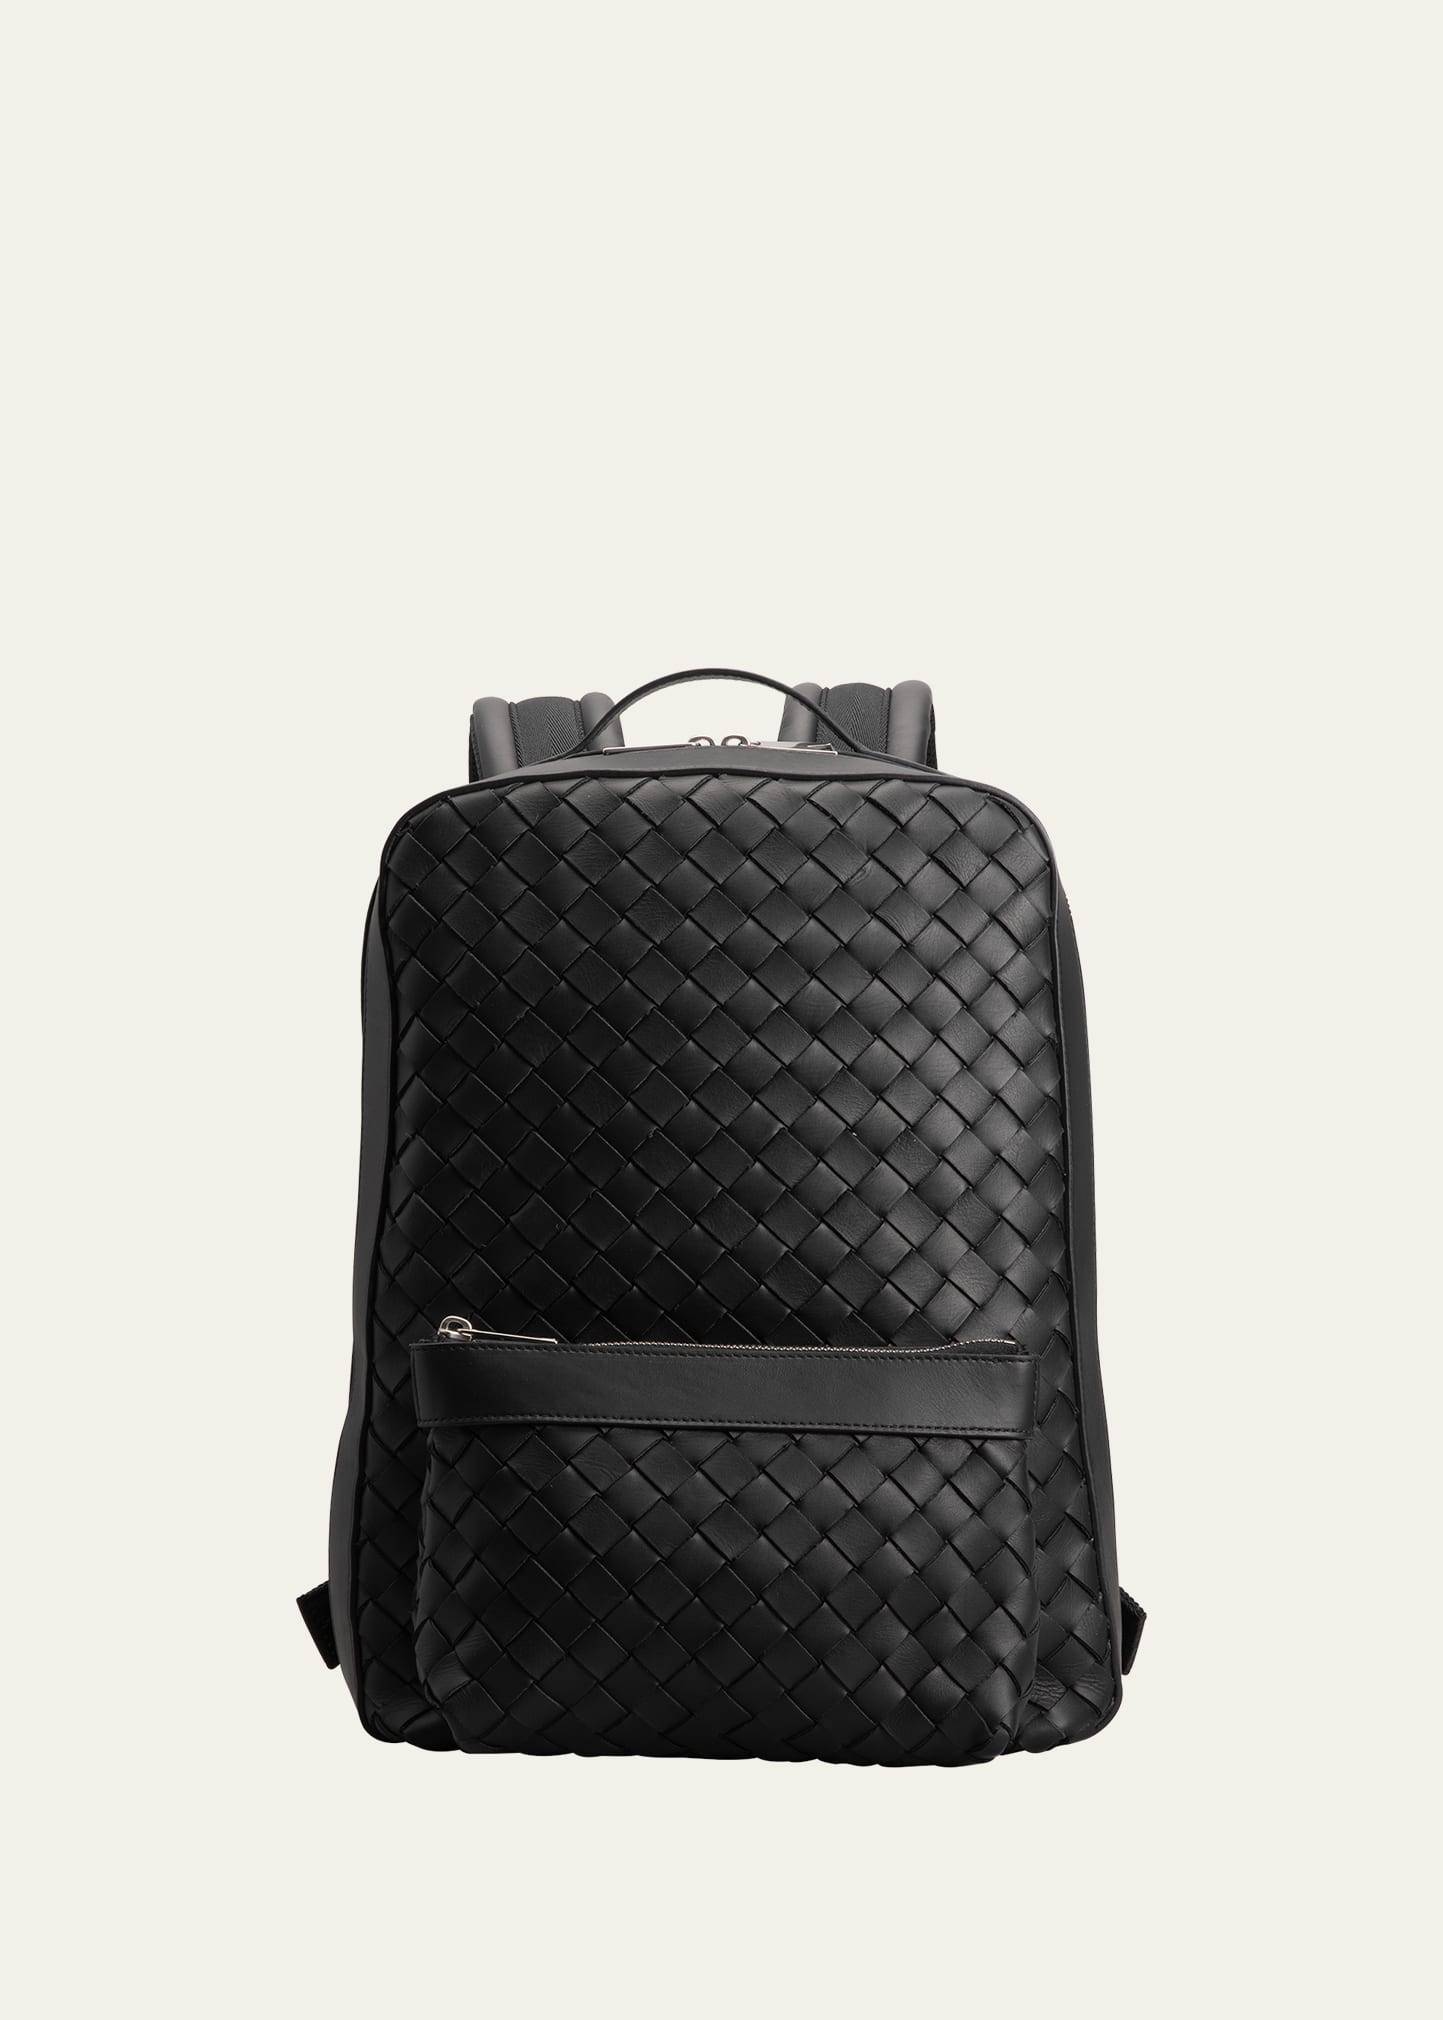 Bottega Veneta Men's Small Classic Intrecciato Leather Backpack